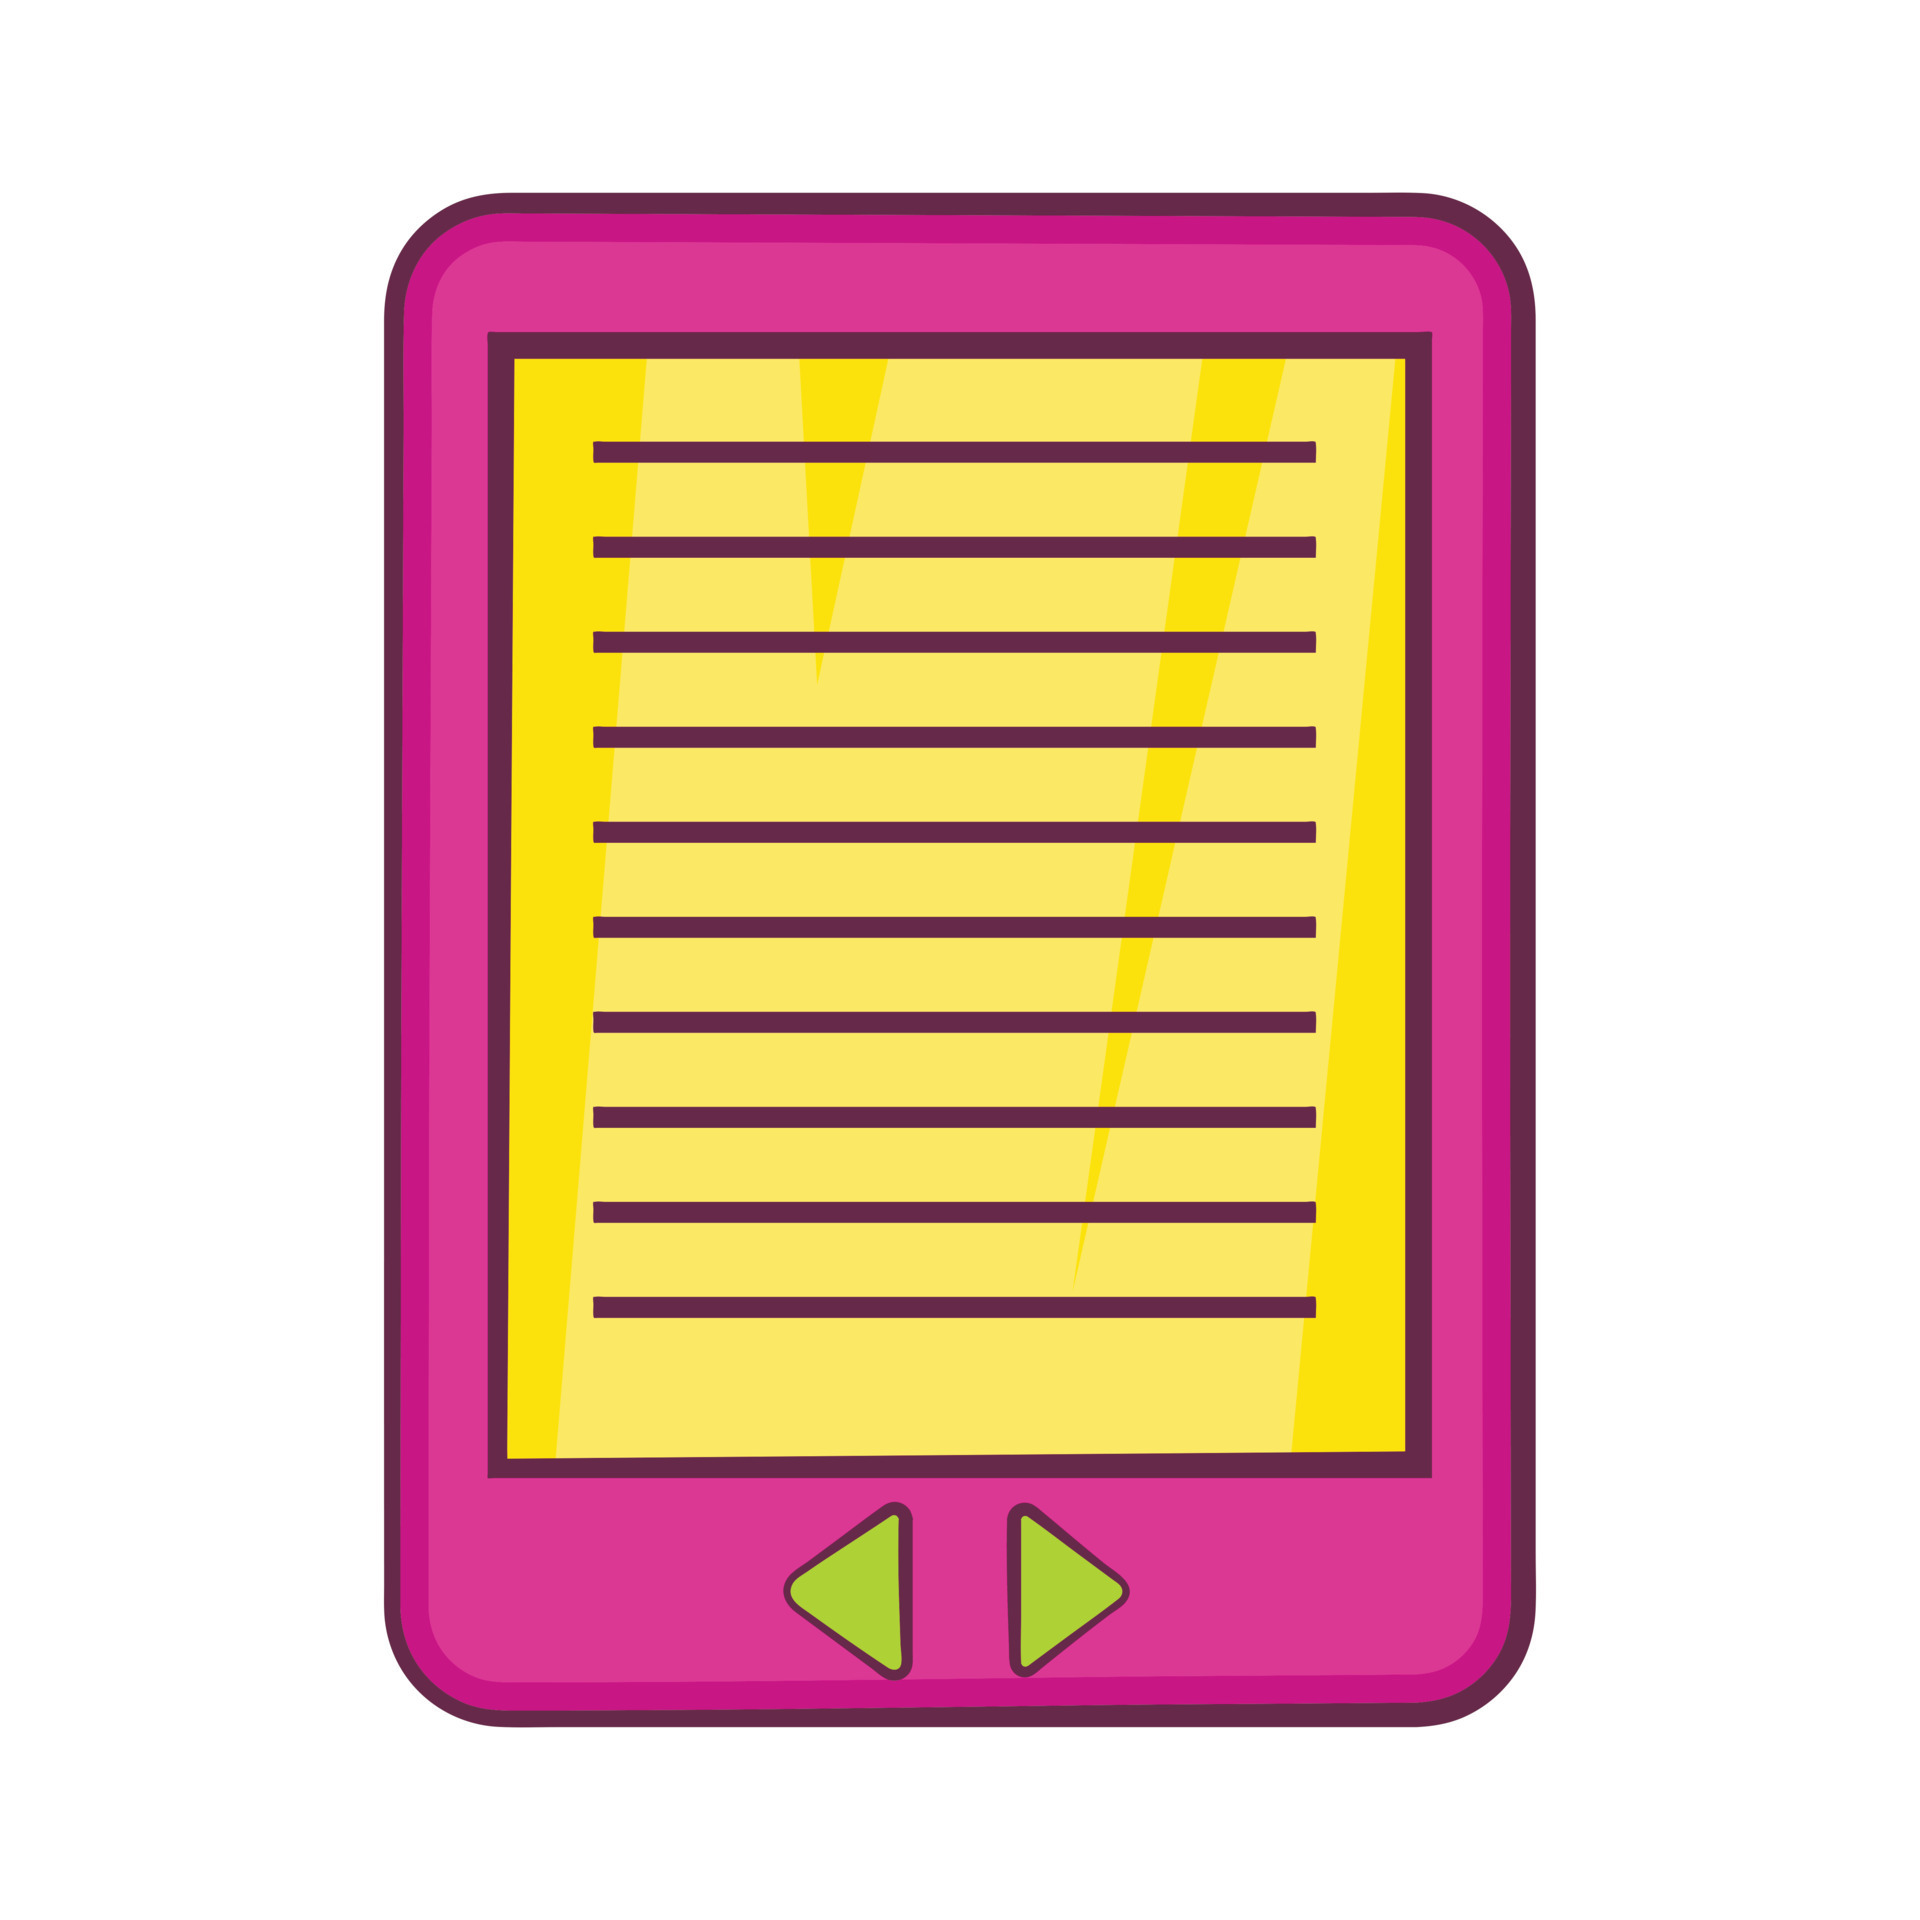 Icono de aplicación de lector de libros electrónicos, estilo de dibujos  animados 14279247 Vector en Vecteezy